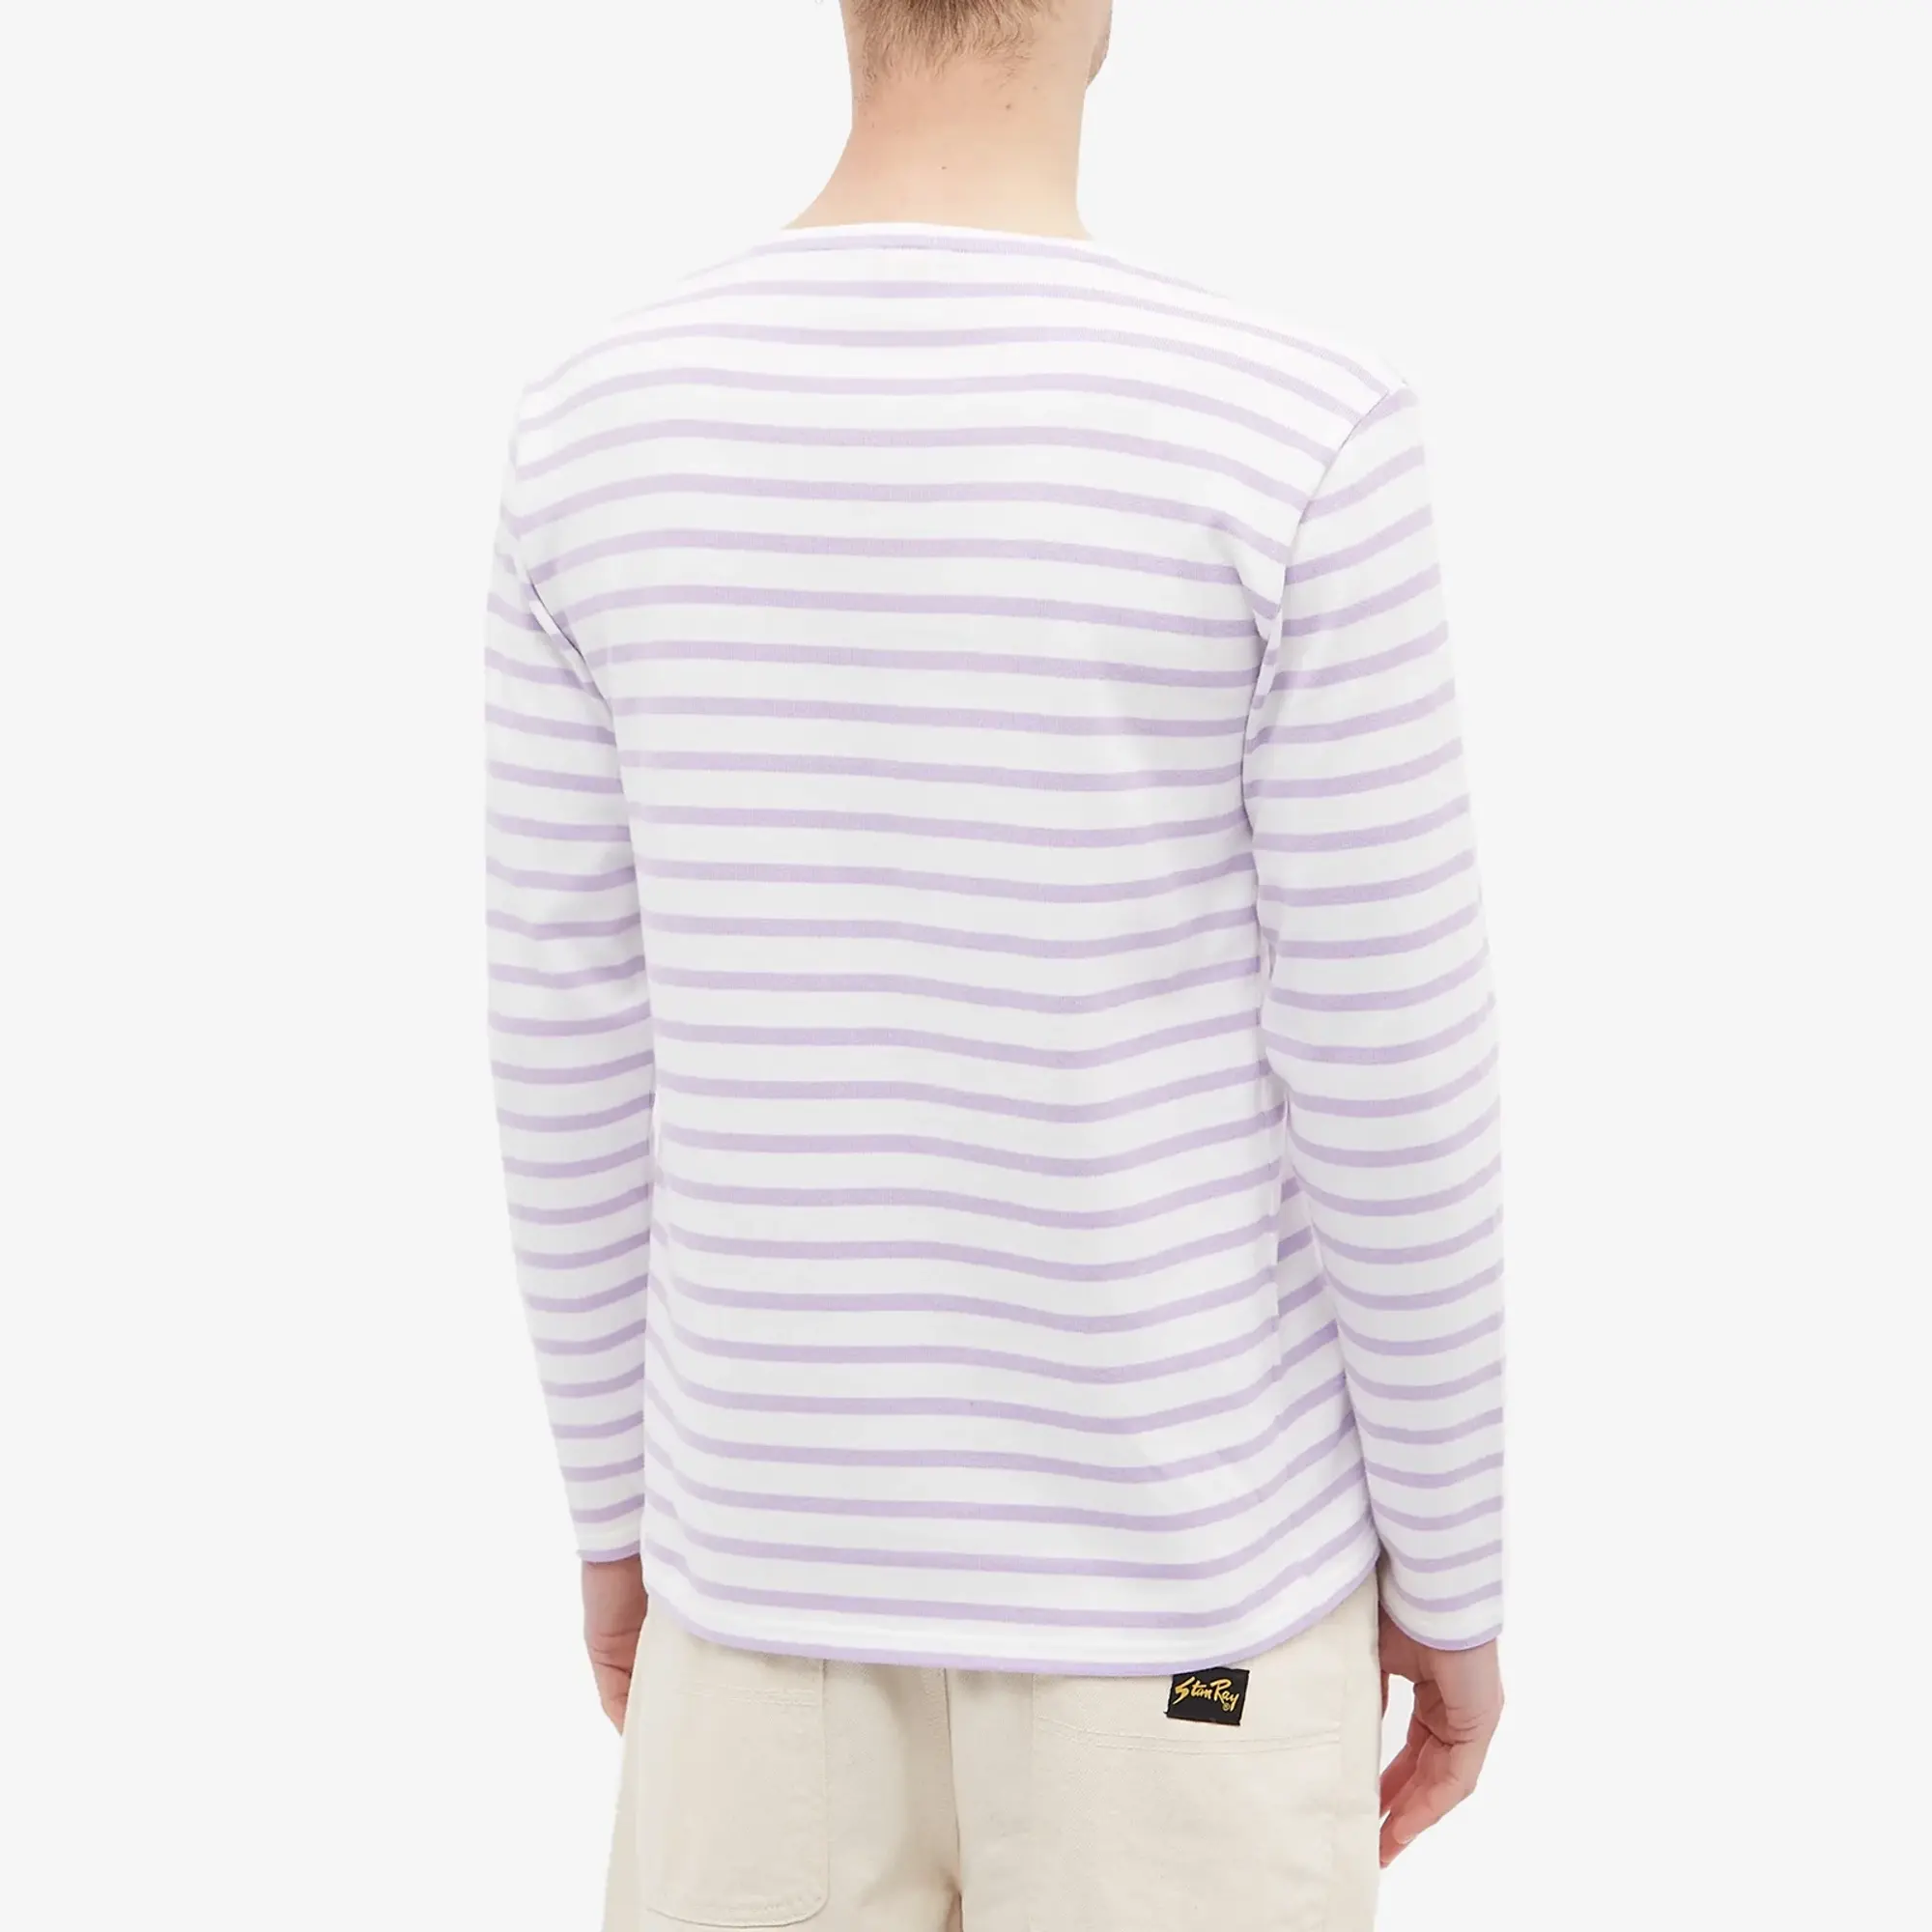 Armor-Lux Men's 59654 Long Sleeve Organic Stripe T-Shirt Milk/Lavender